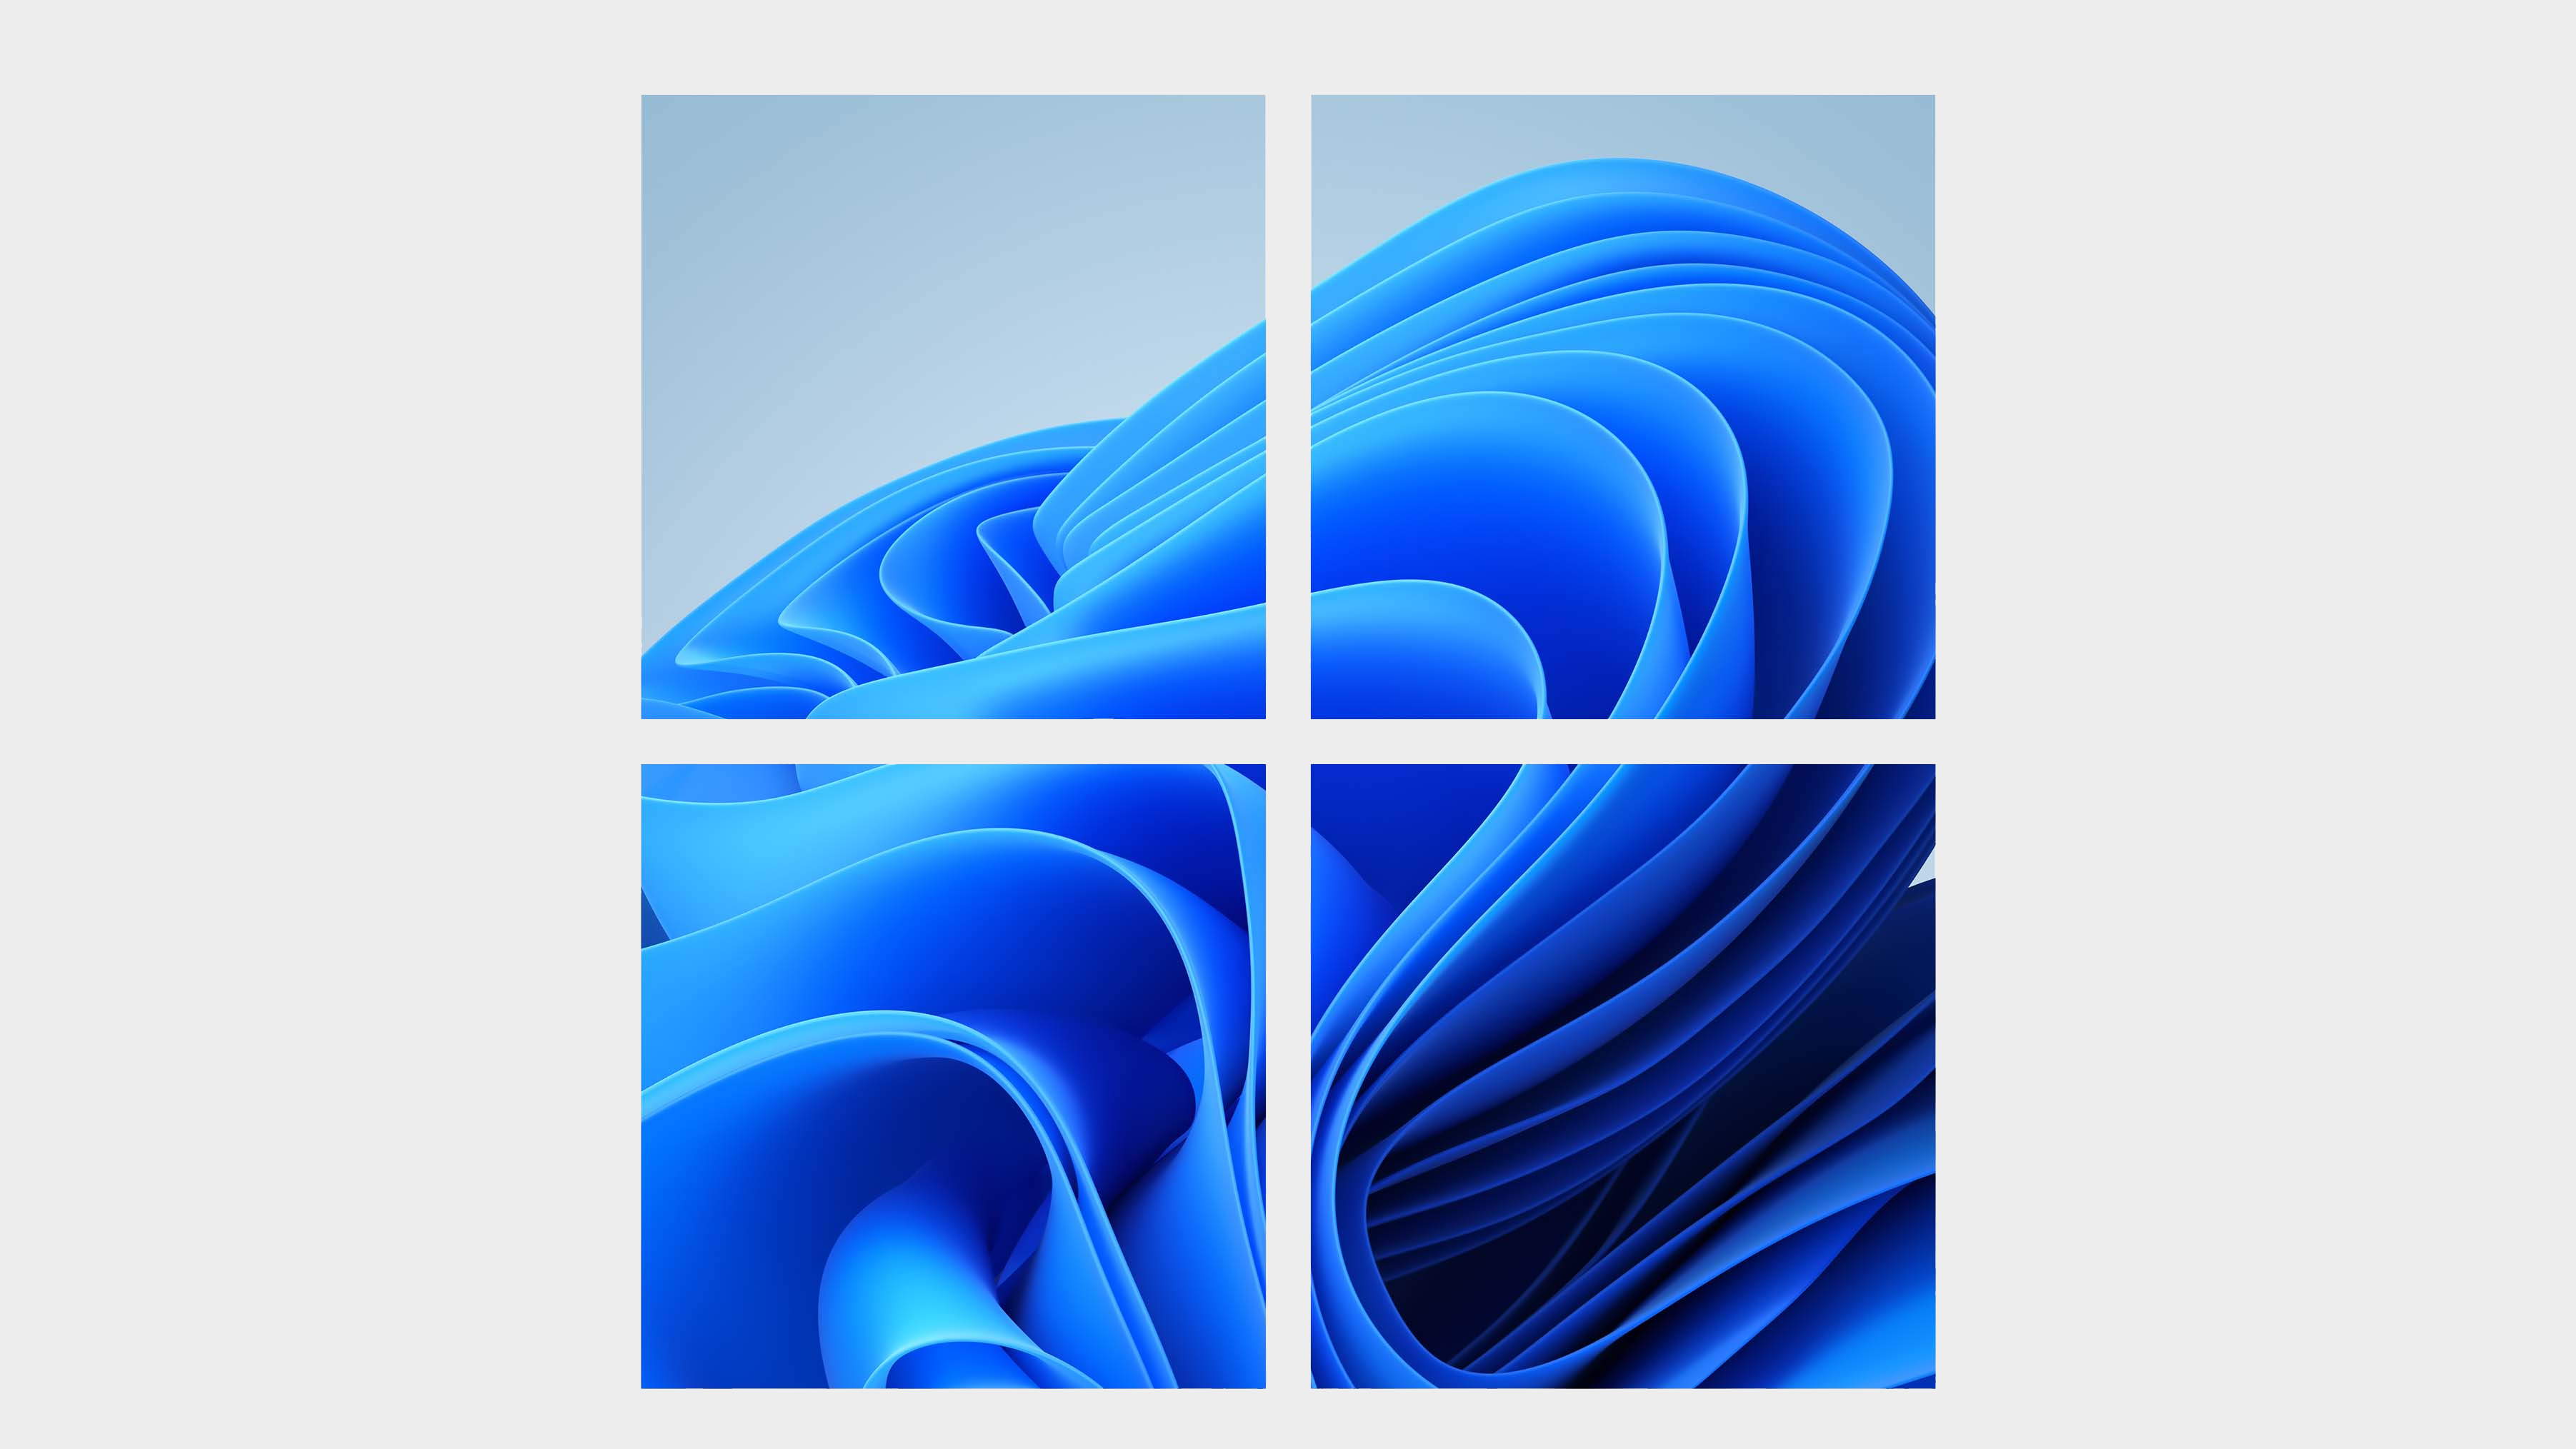 Windows 11 Square logo